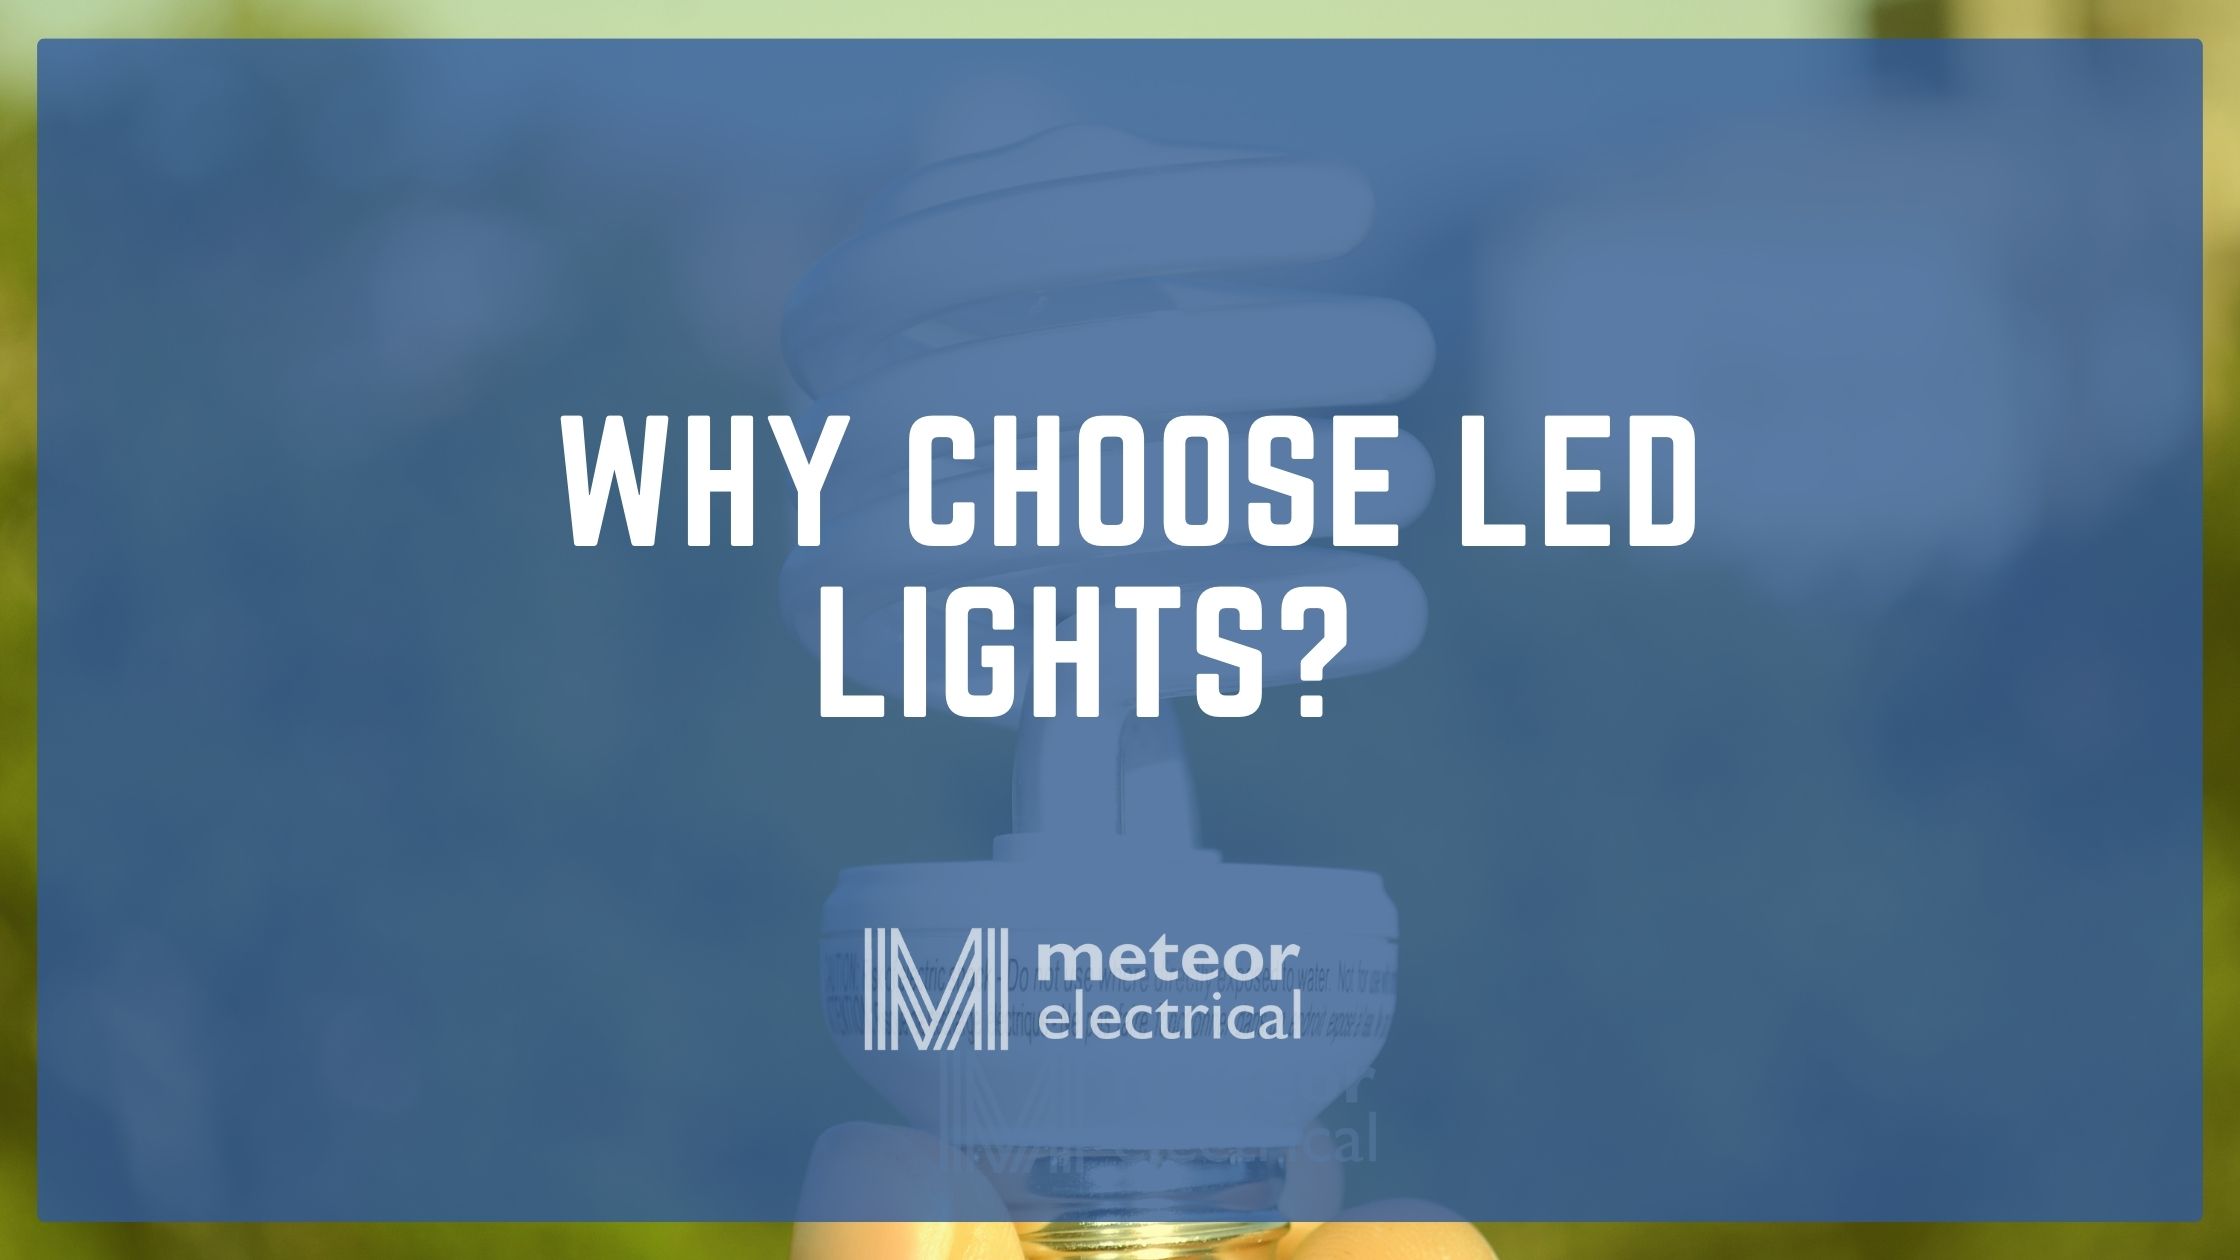 Why choose LED lights?  